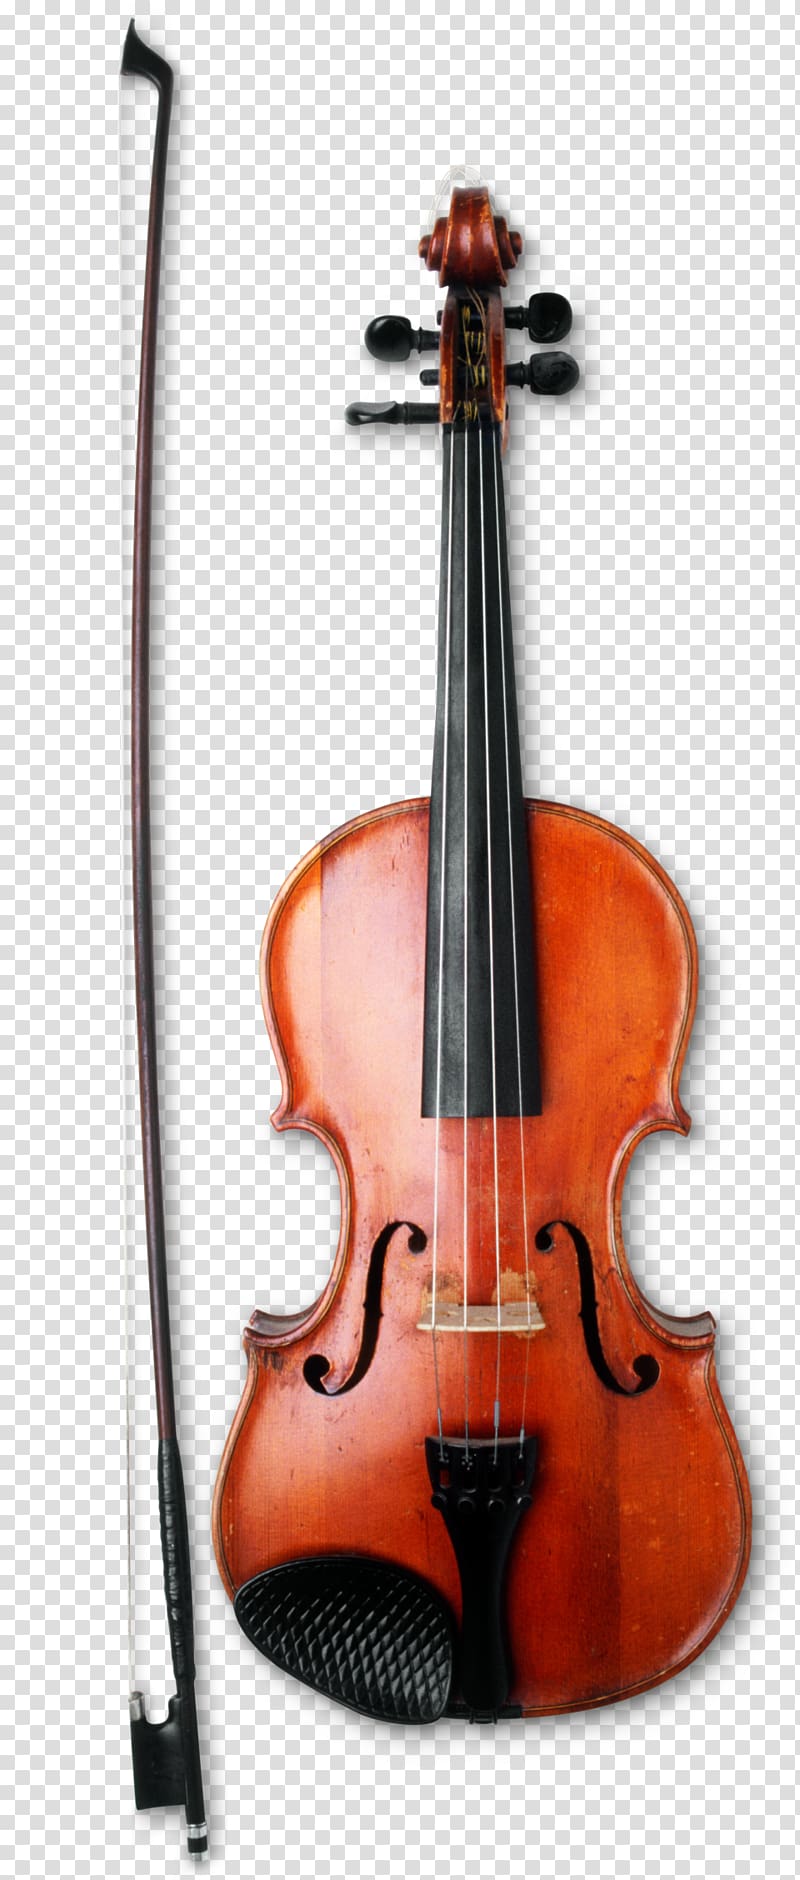 Violin Musical Instruments Bow String Instruments Viola, trombone transparent background PNG clipart